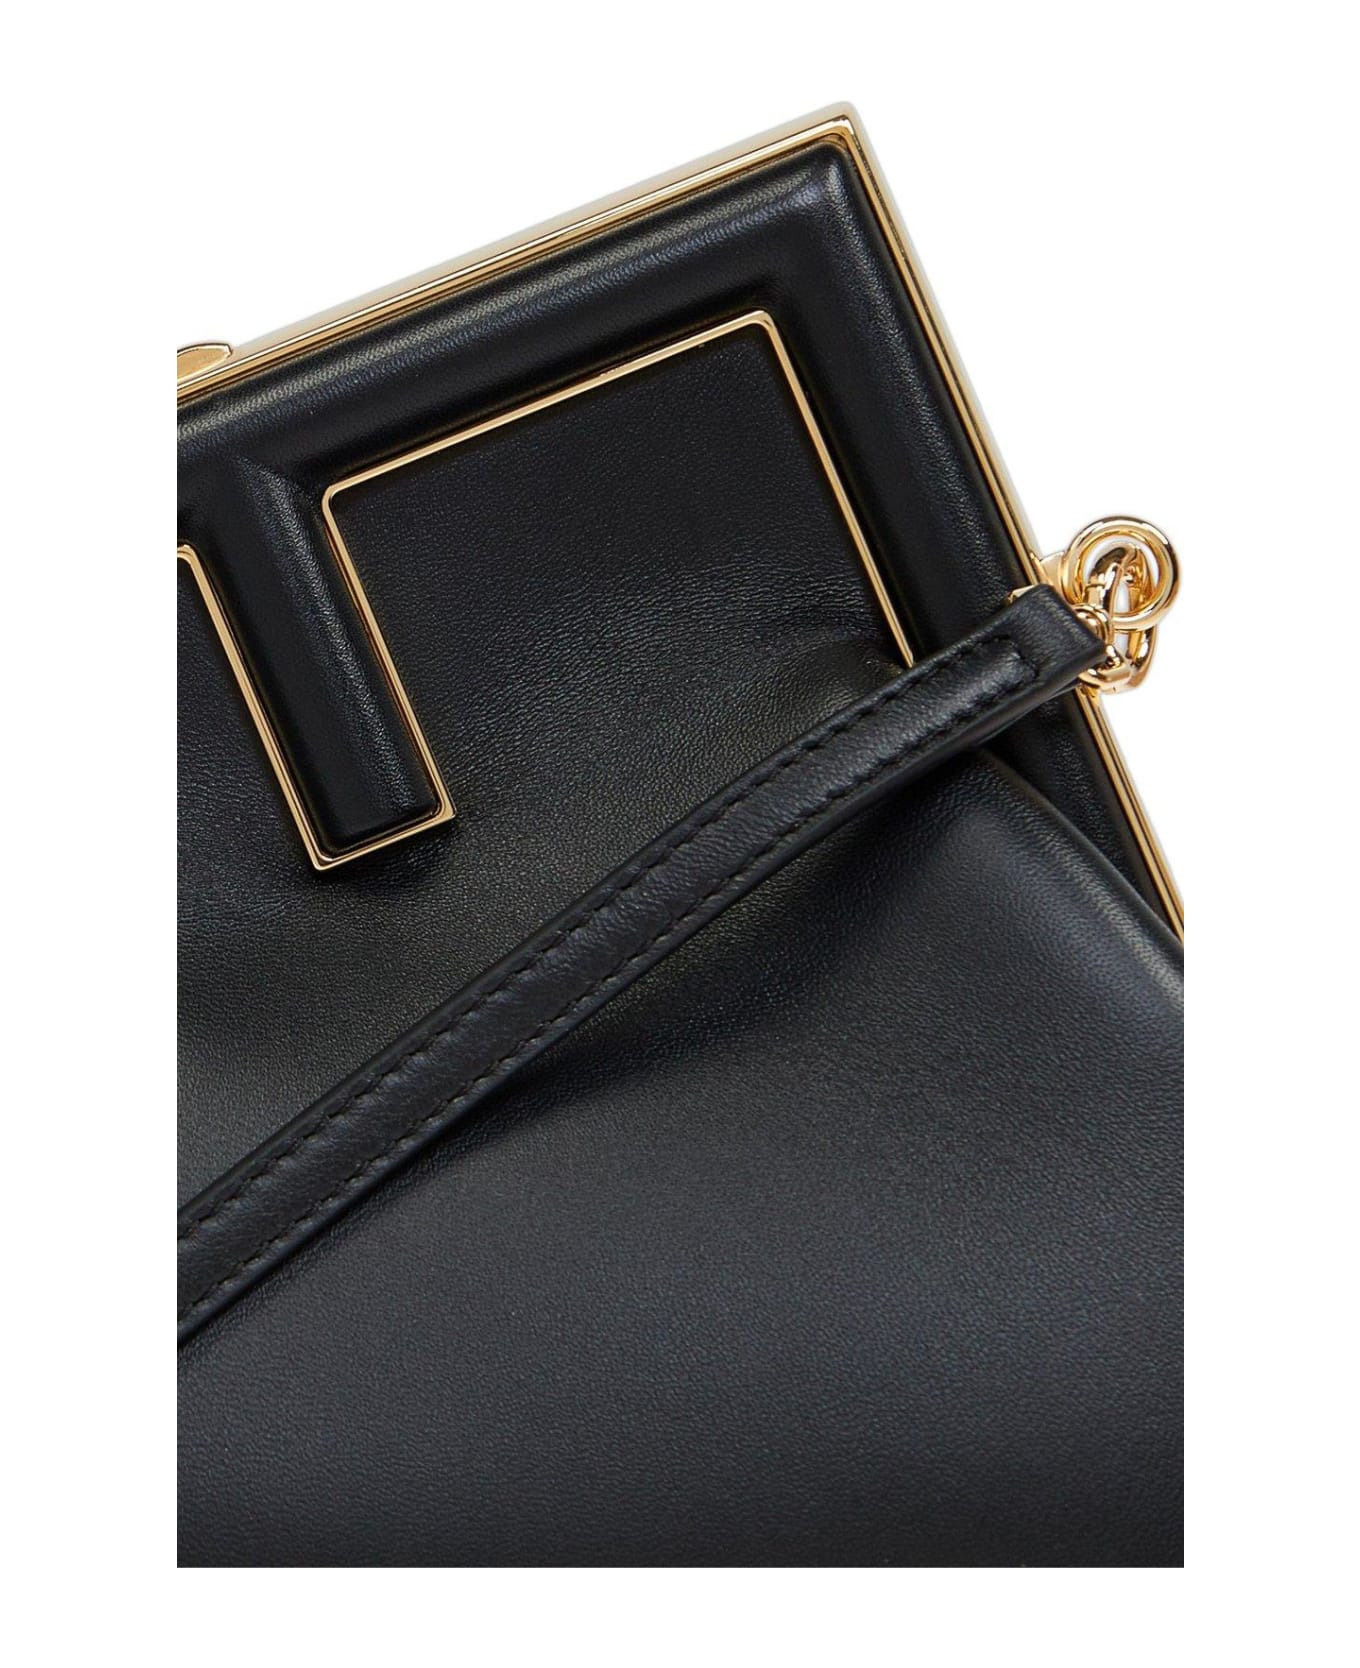 Fendi Logo Detailed Small Clutch Bag - Nero/oro soft トートバッグ